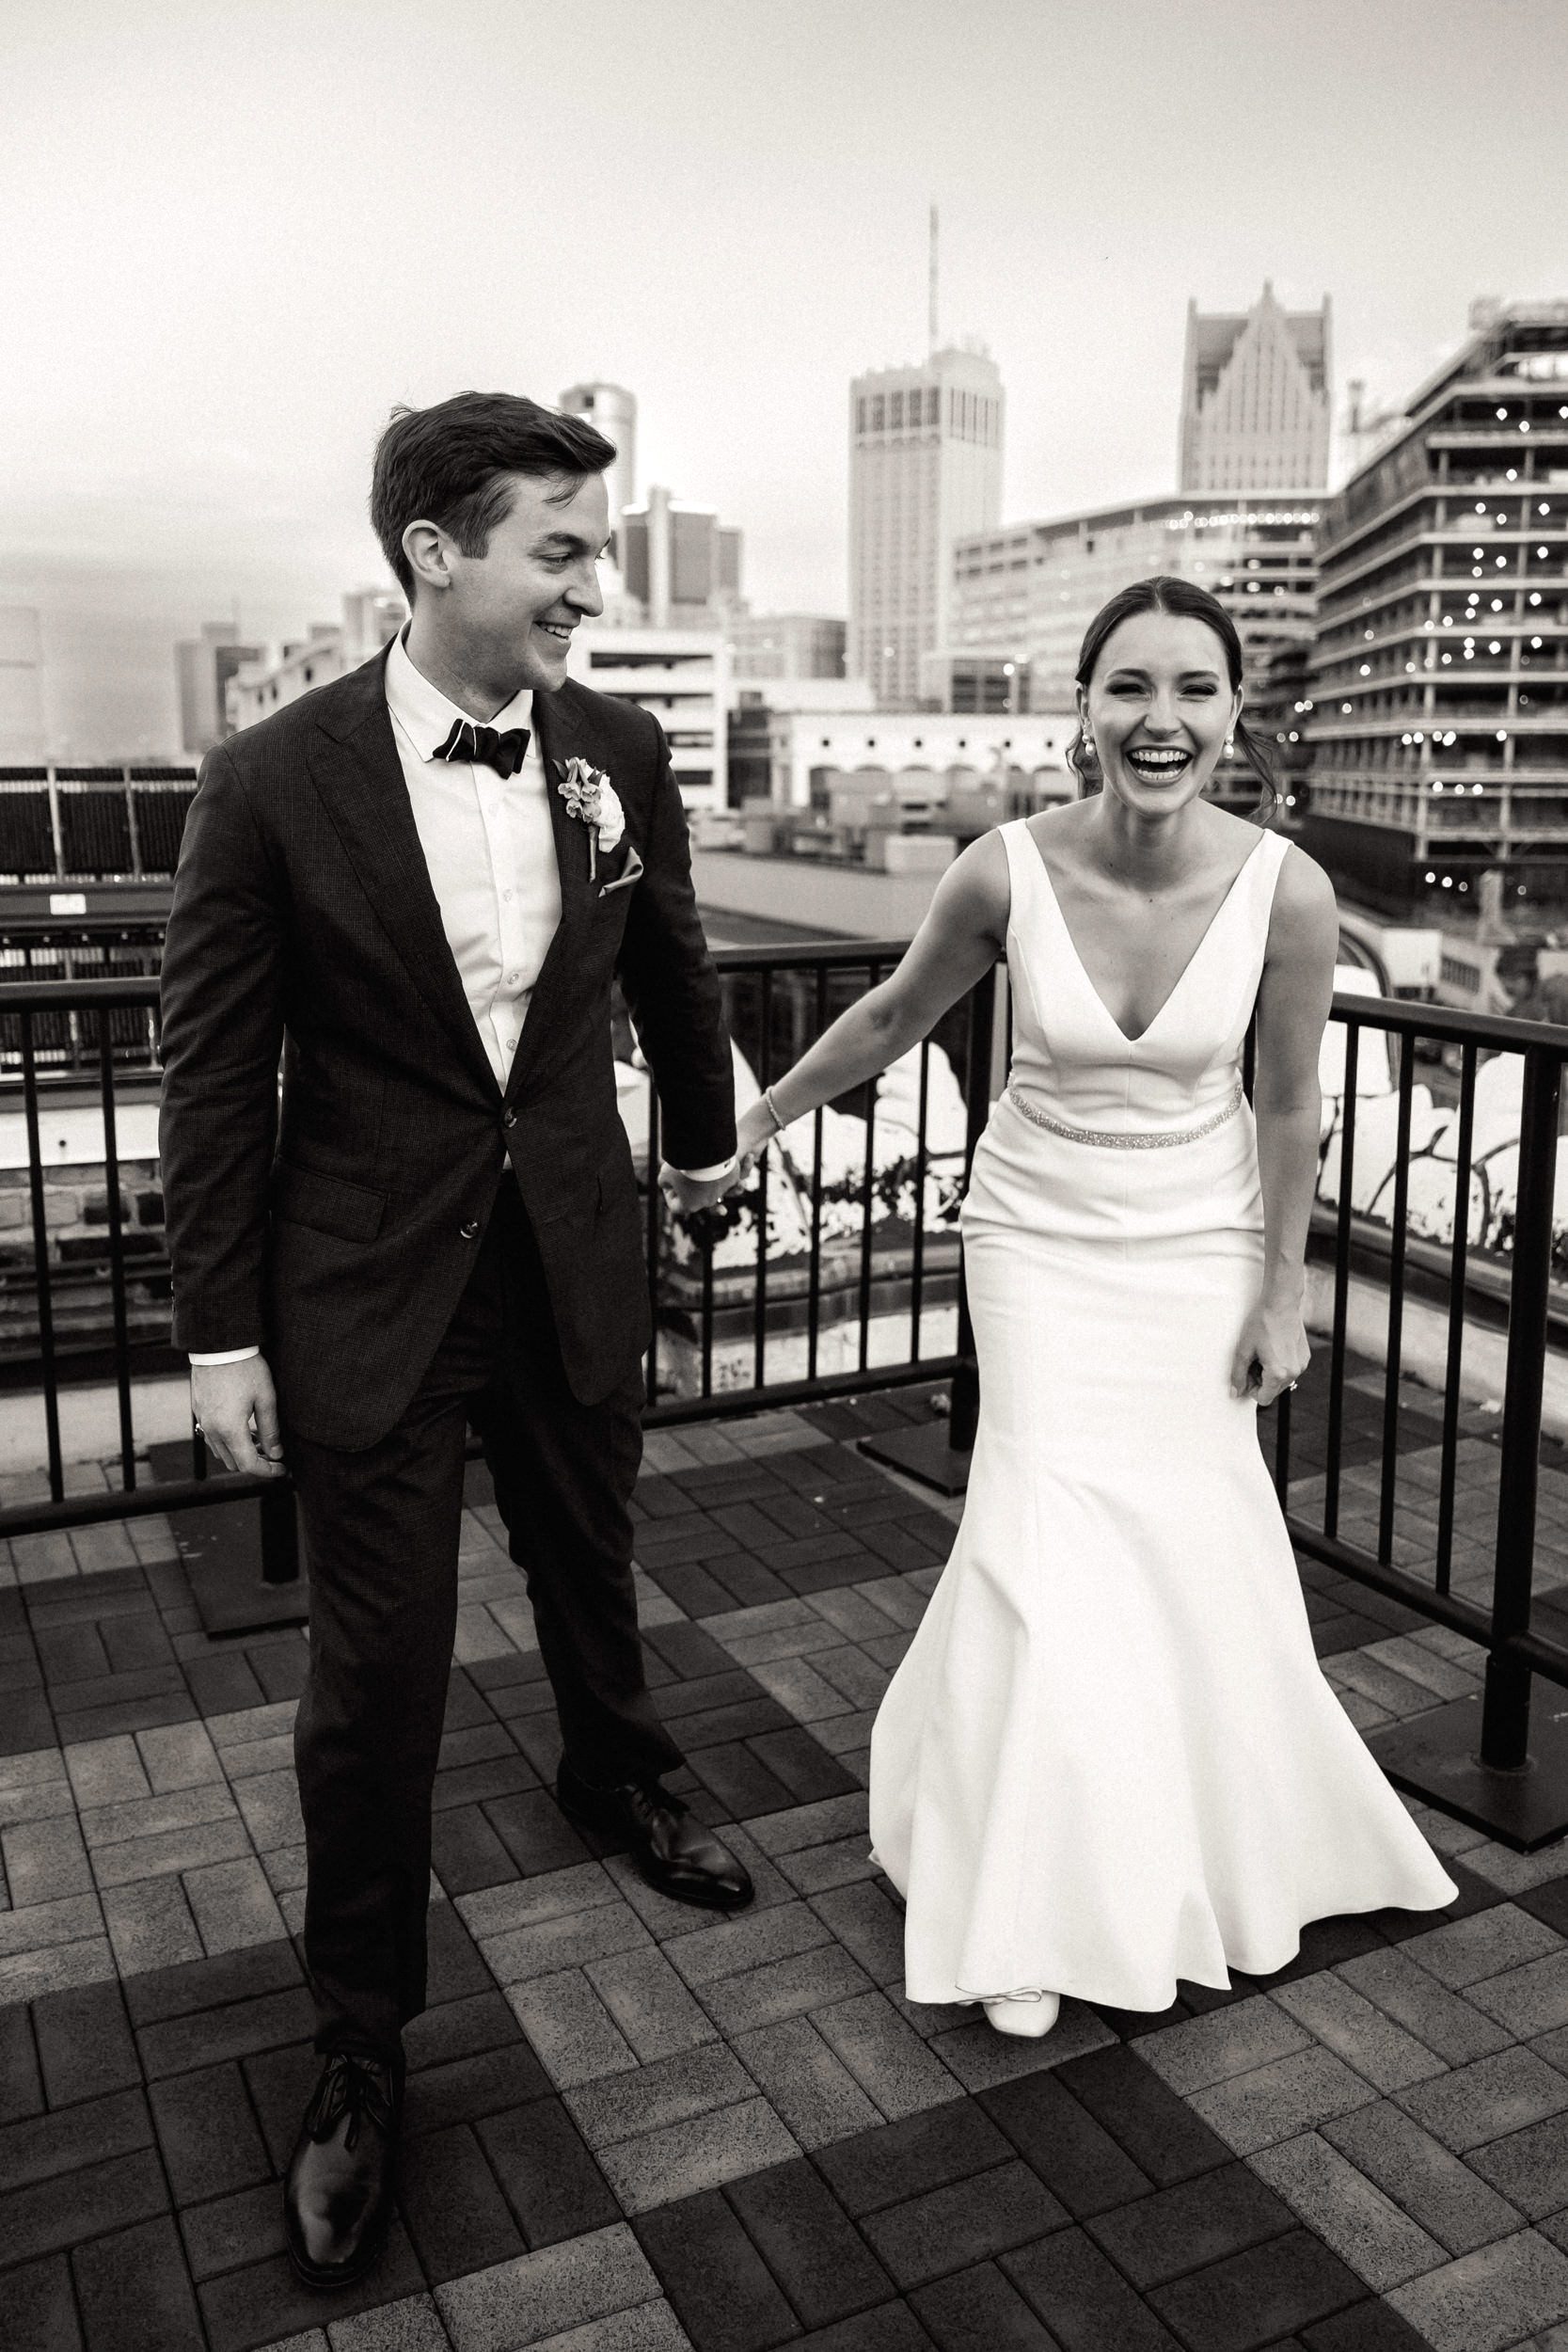 Detroit Opera House rooftop wedding photo